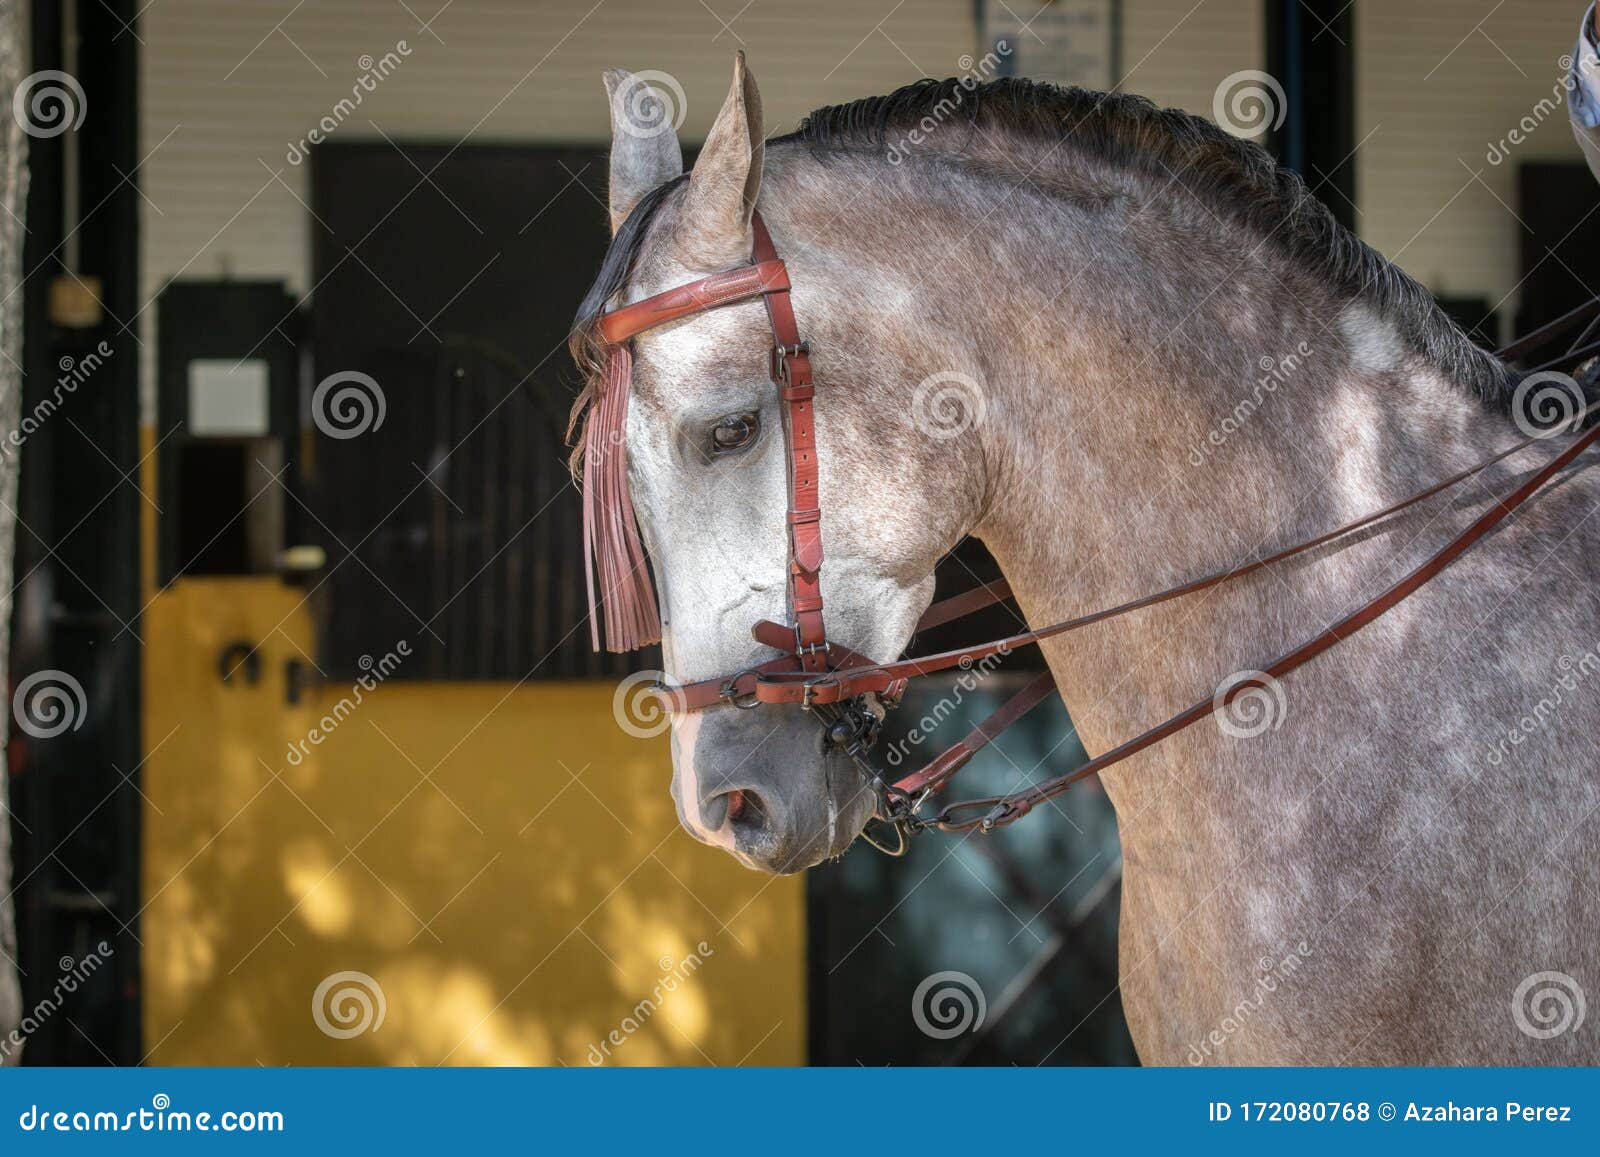 portrait of the head of a hispano arabian horse in doma vaquera